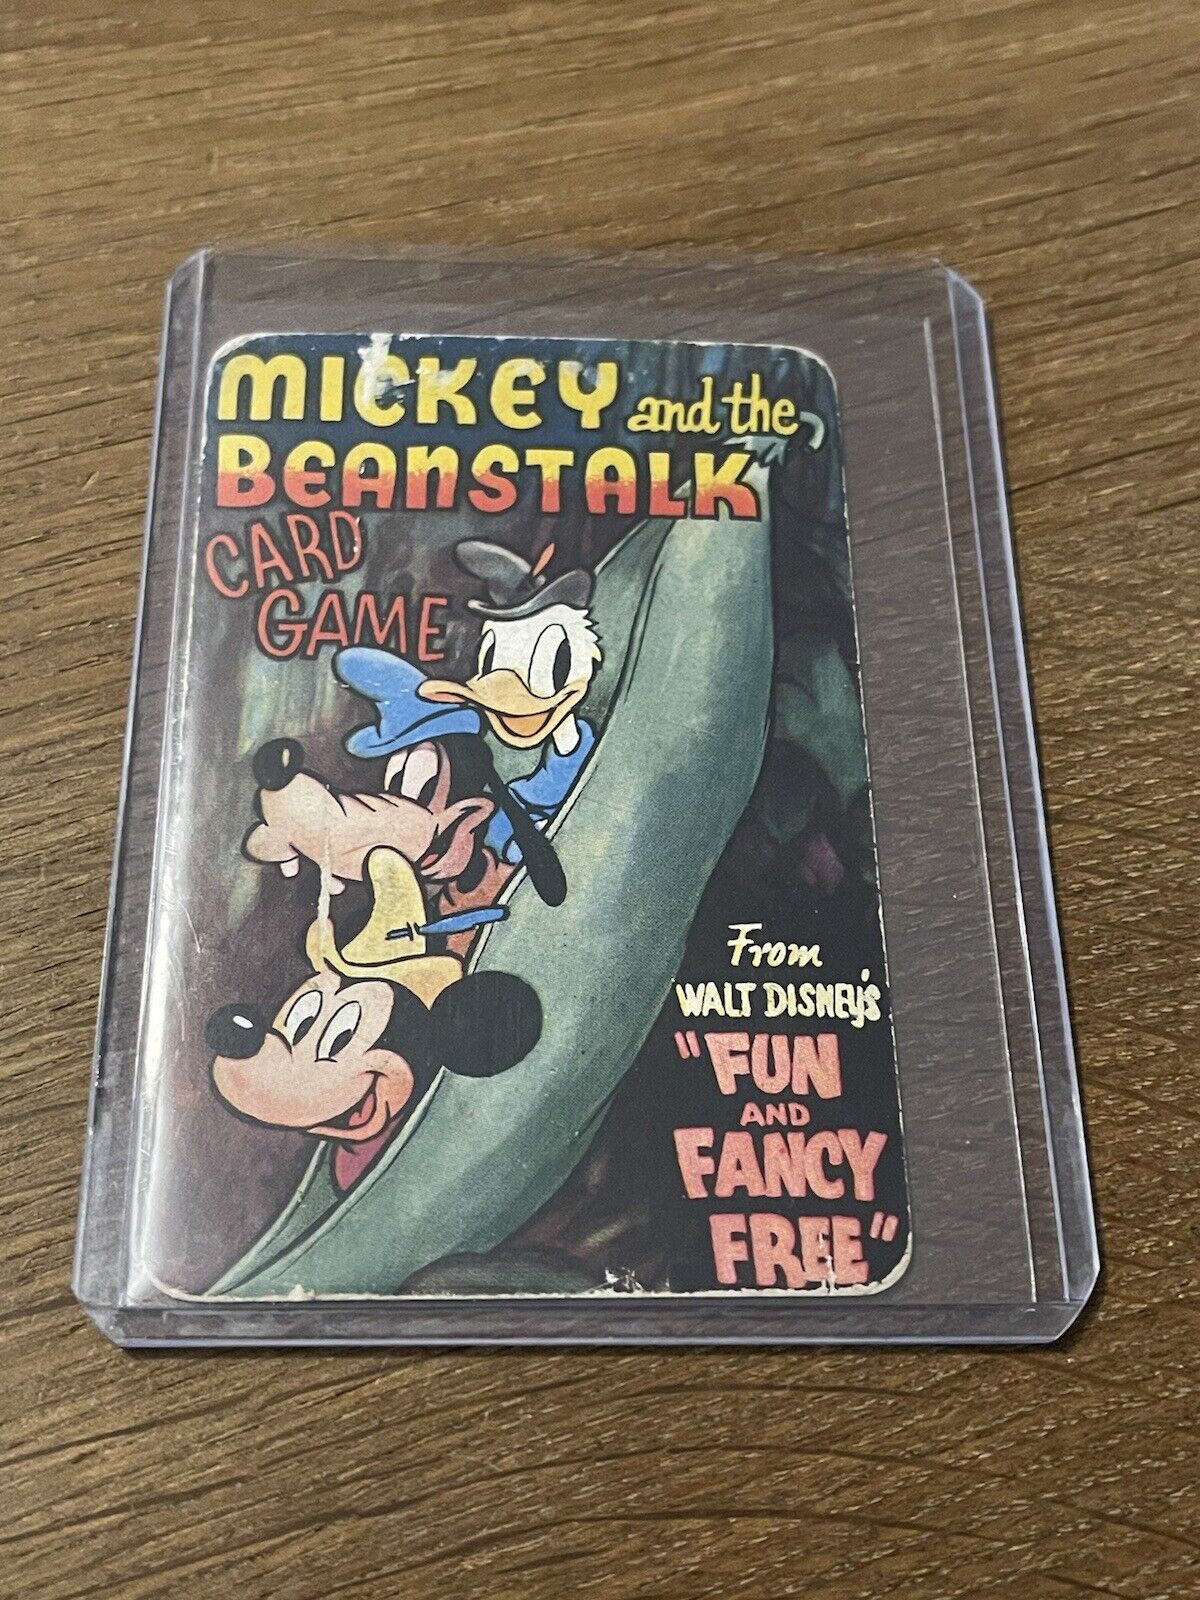 1947 CASTELL BROS. LTD. HEADER CARD MICKEY BEANSTALK MICKEY MOUSE CARD DISNEYANA